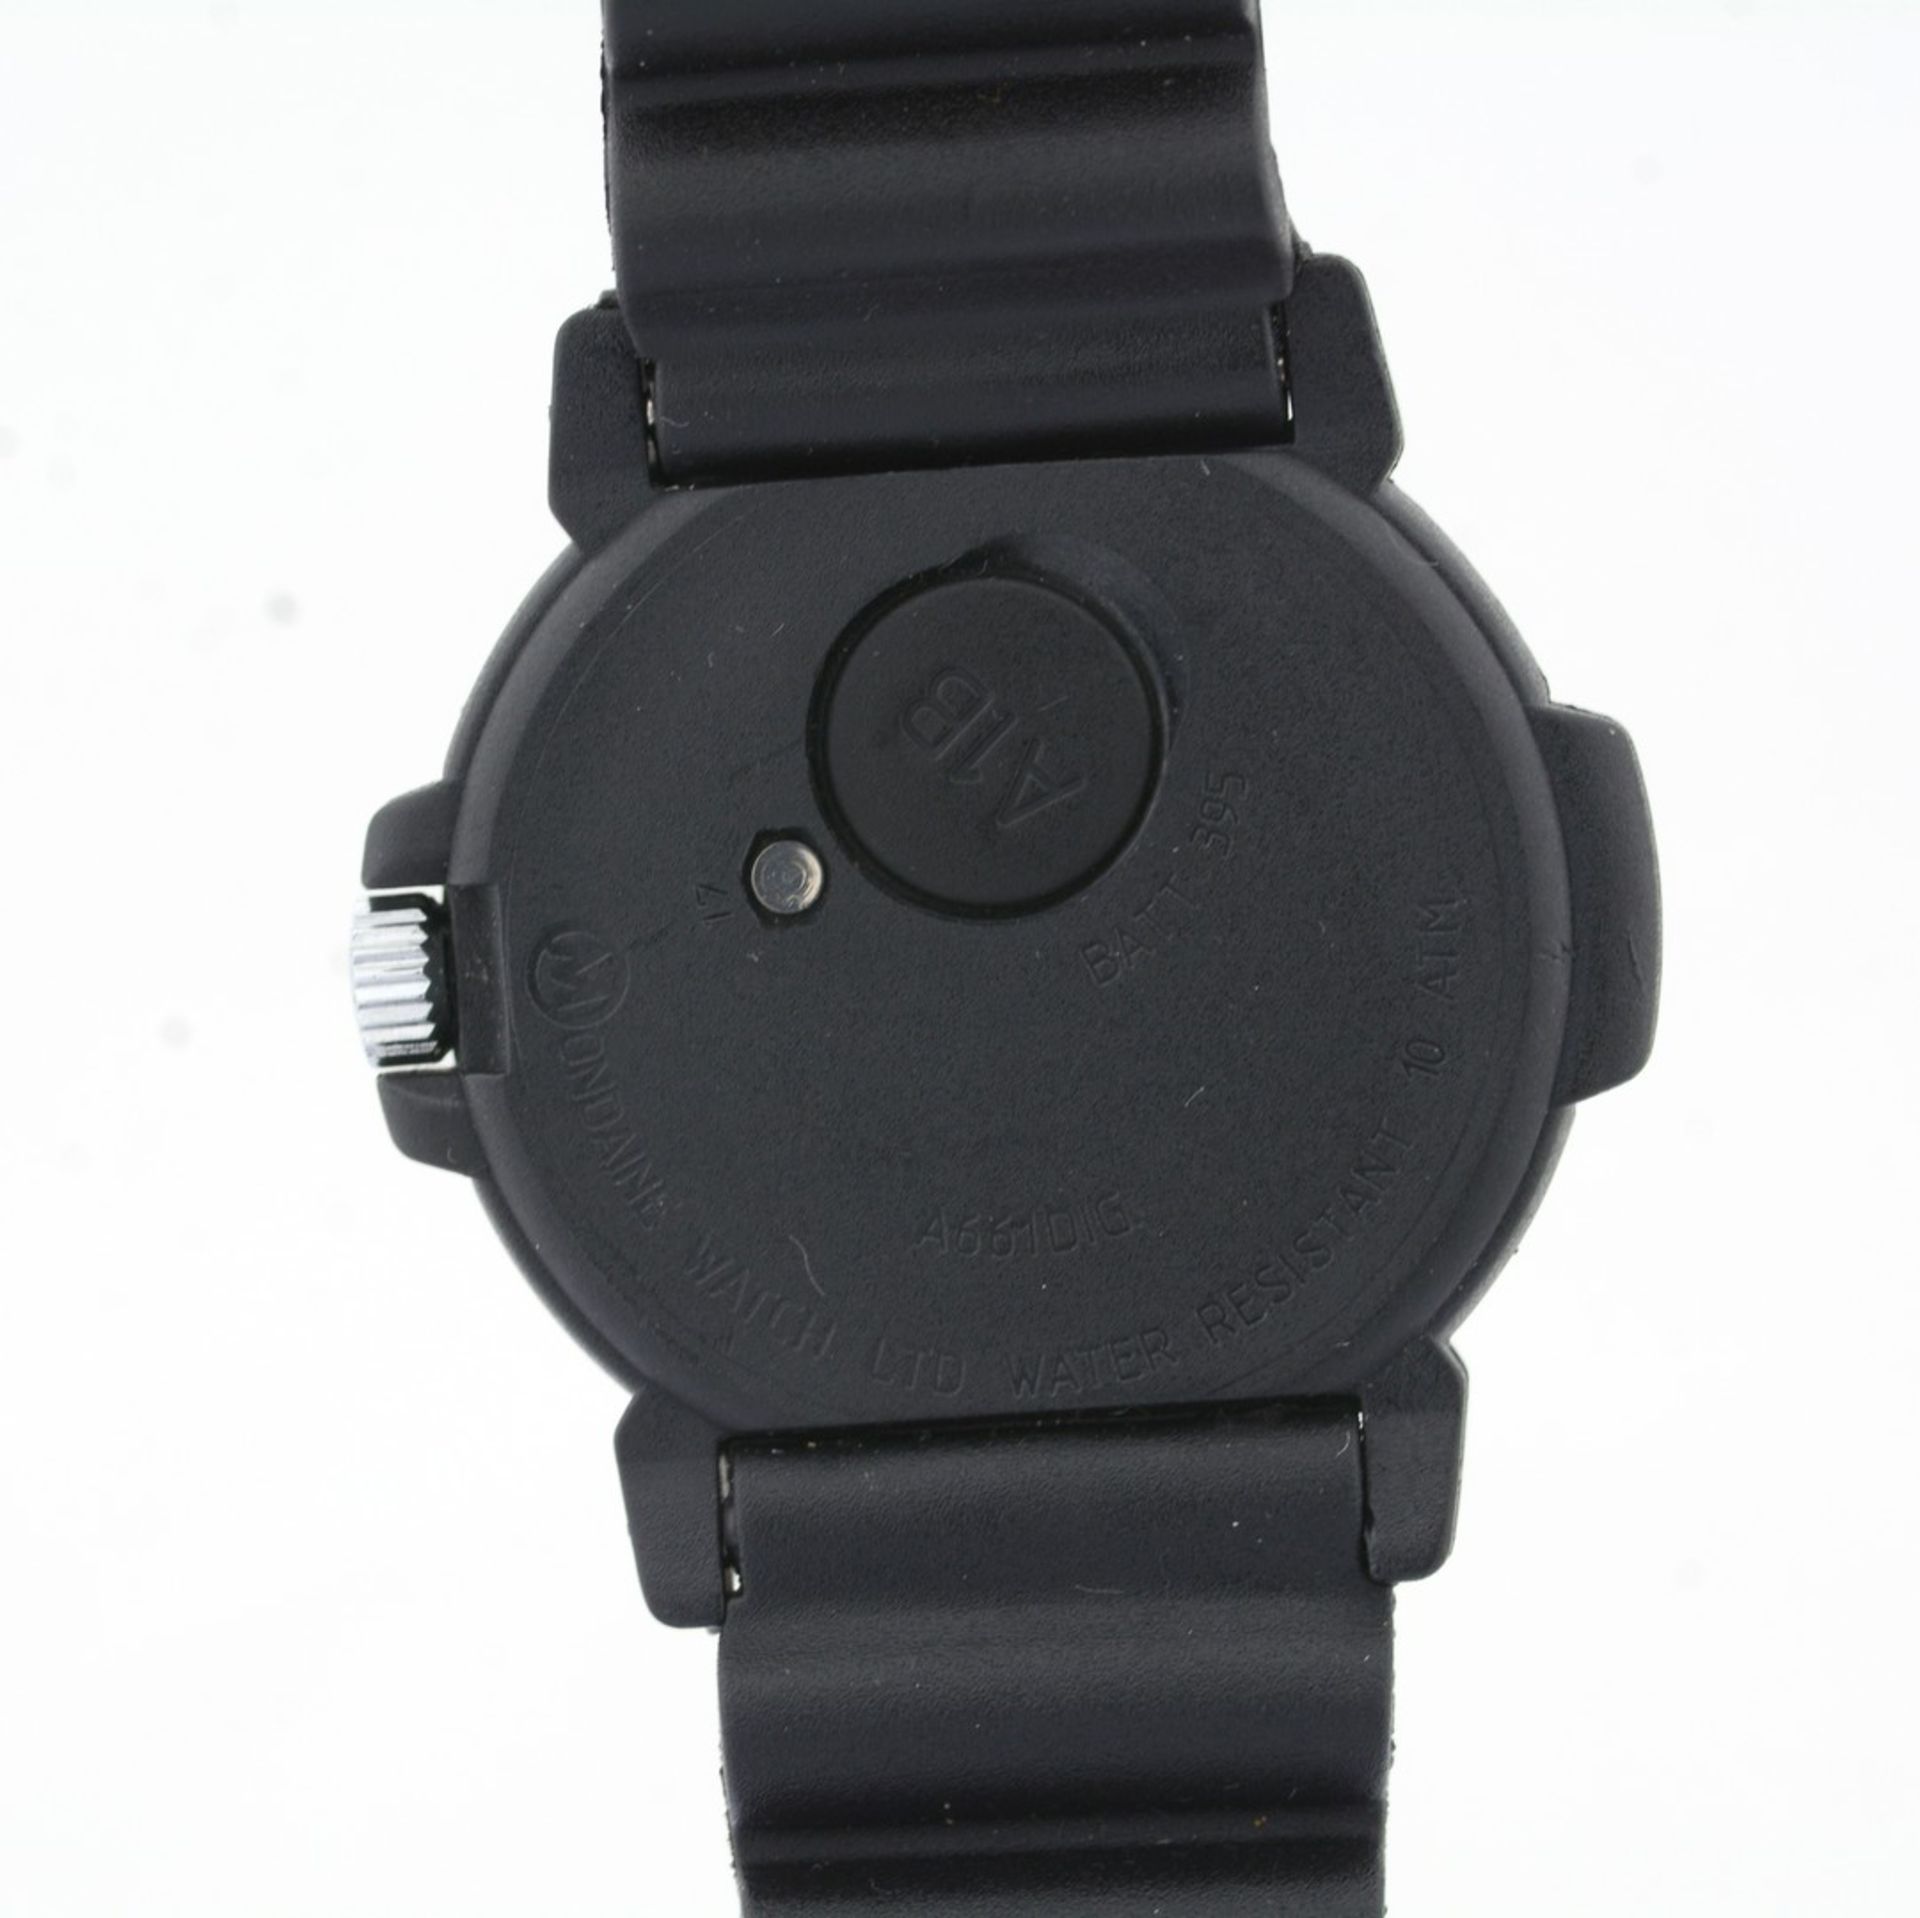 Mondaine / M-Watch 100m - Date - (Unworn) Gentlmen's Plastic Wrist Watch - Image 6 of 6